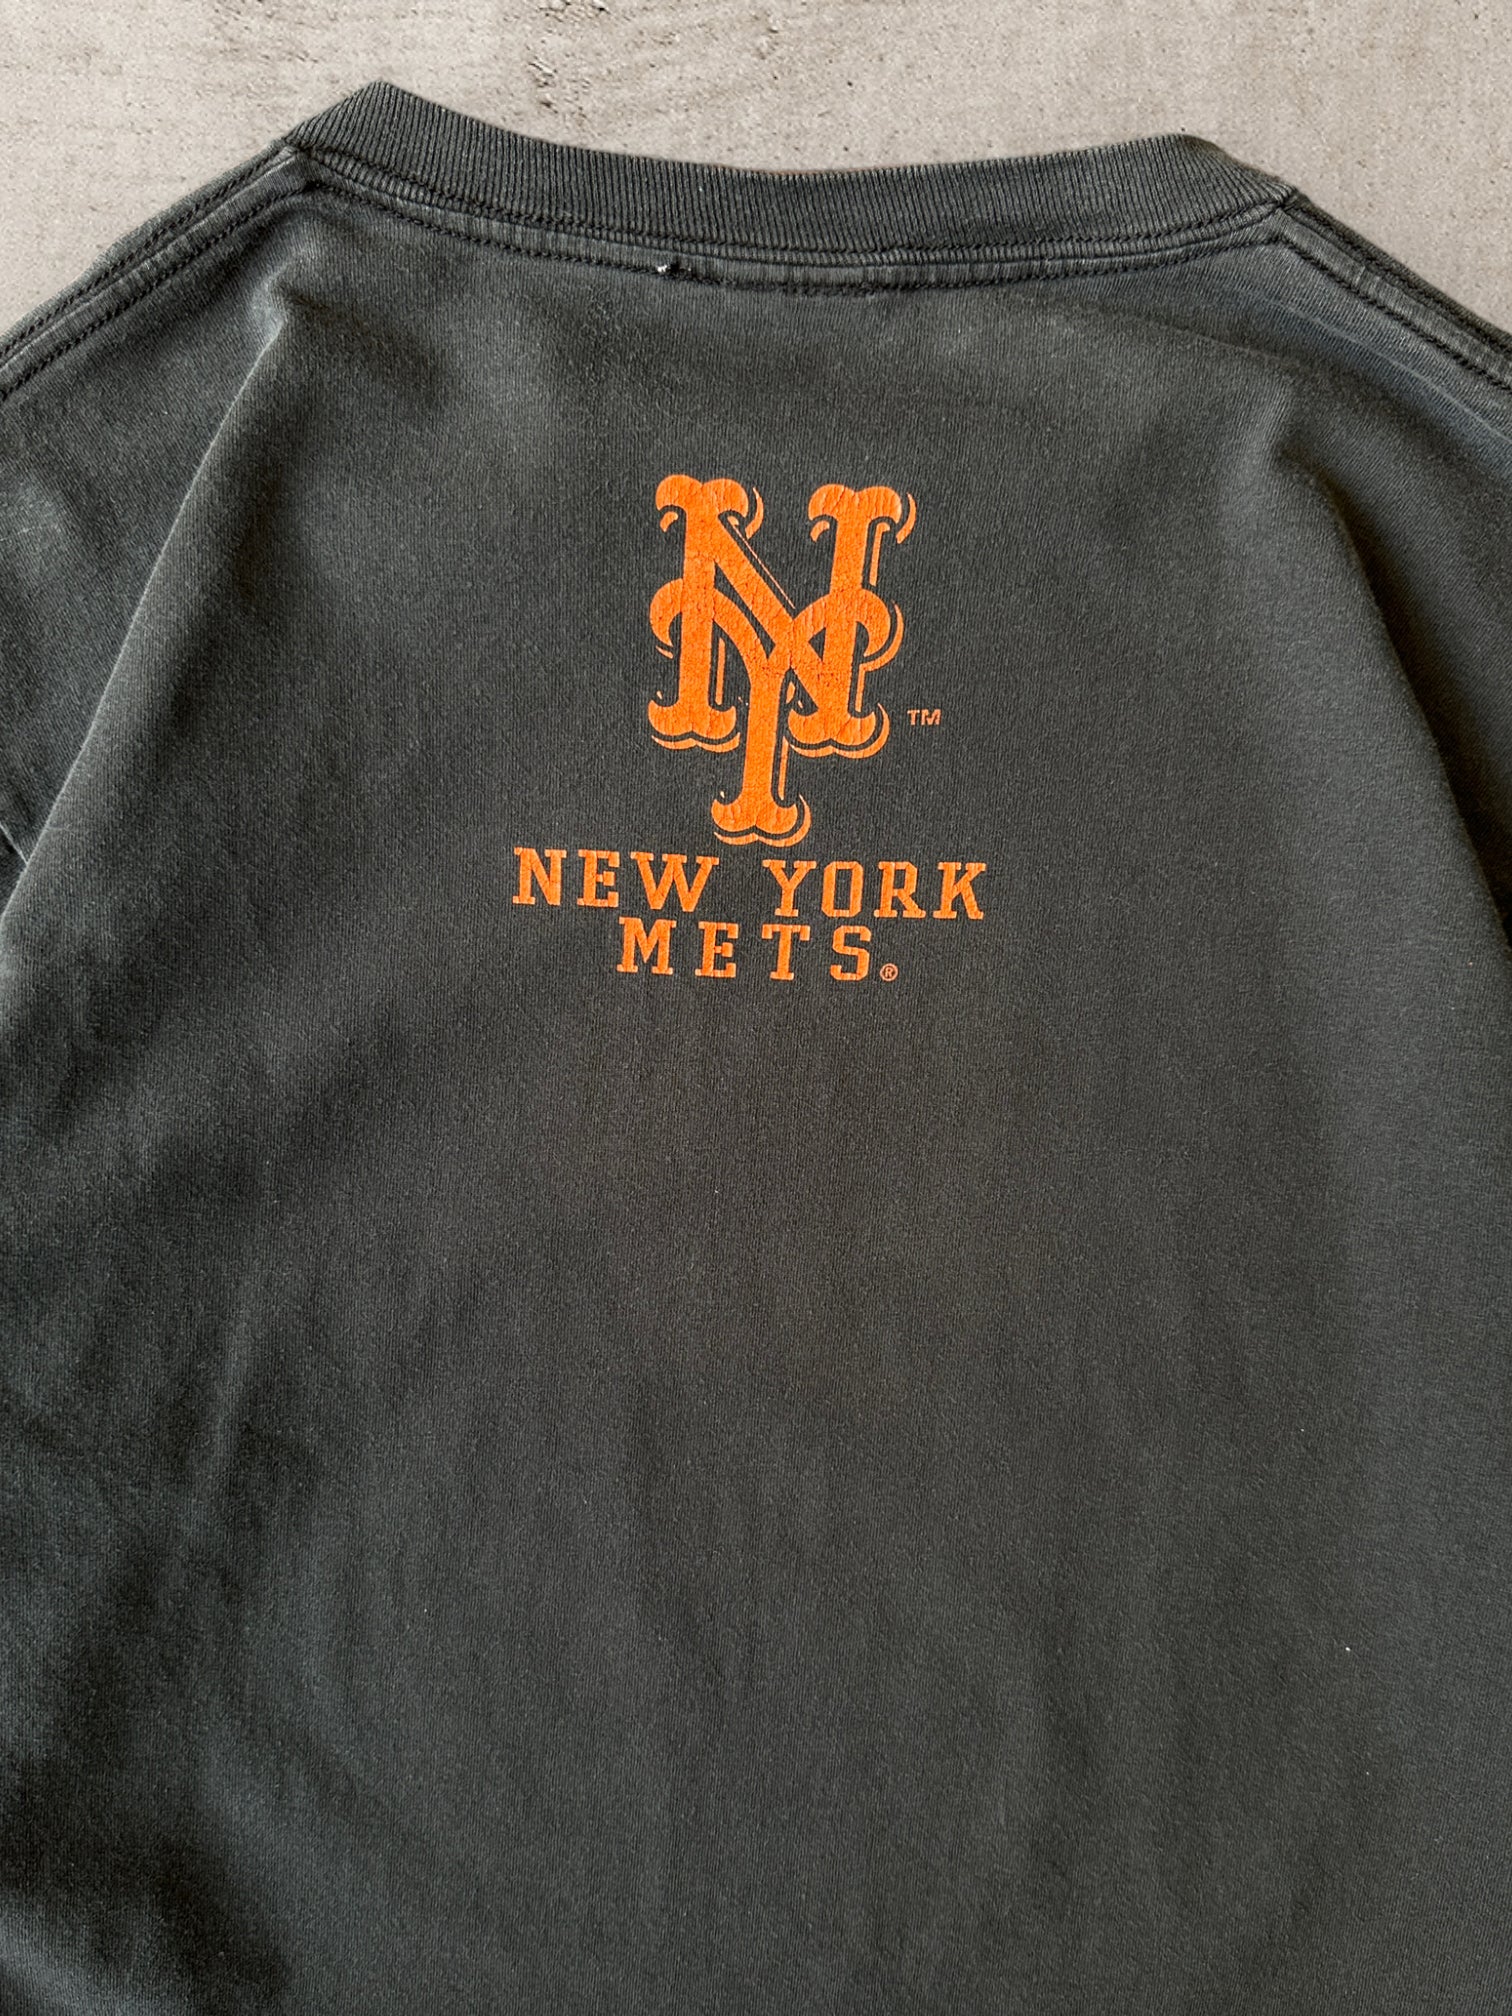 01 Lee Sport New York Mets MLB Long Sleeve T-Shirt - Large